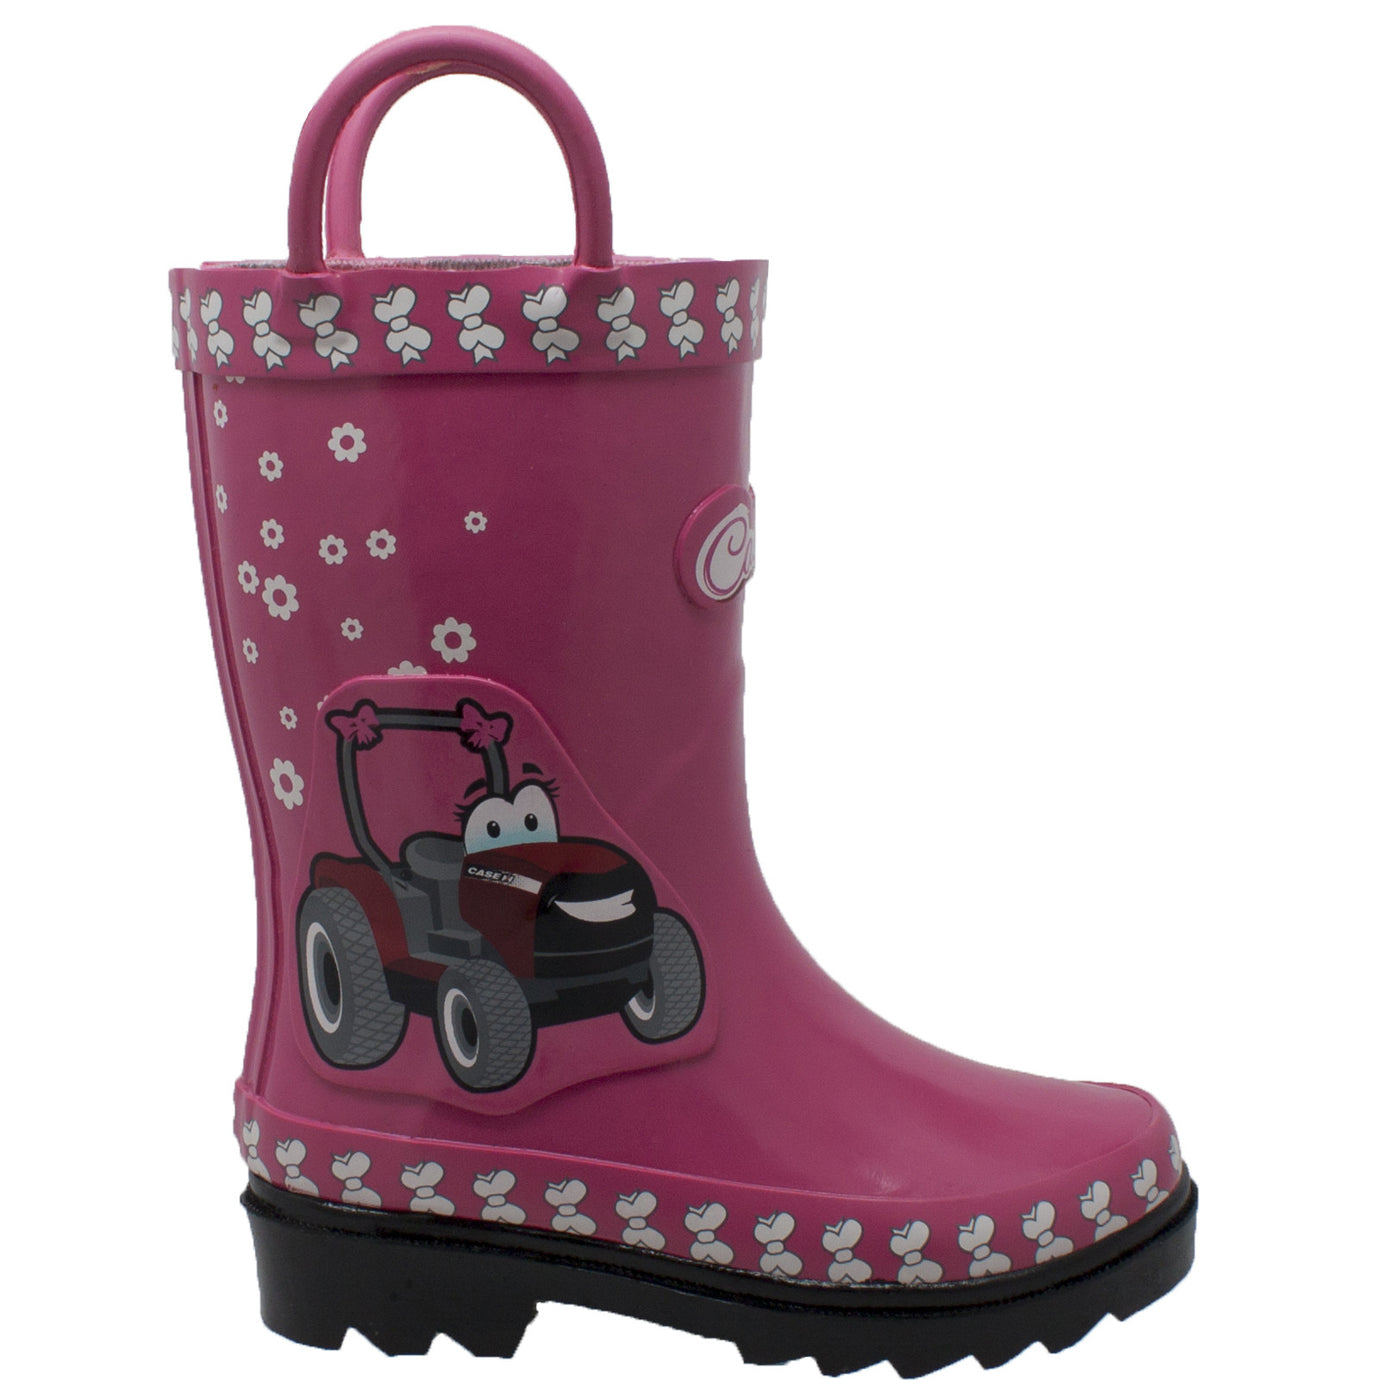 Toddler's 3D "Fern Farmall" Rubber Boot Pink - CI-5004 - Shop Genuine Leather men & women's boots online | AdTecFootWear